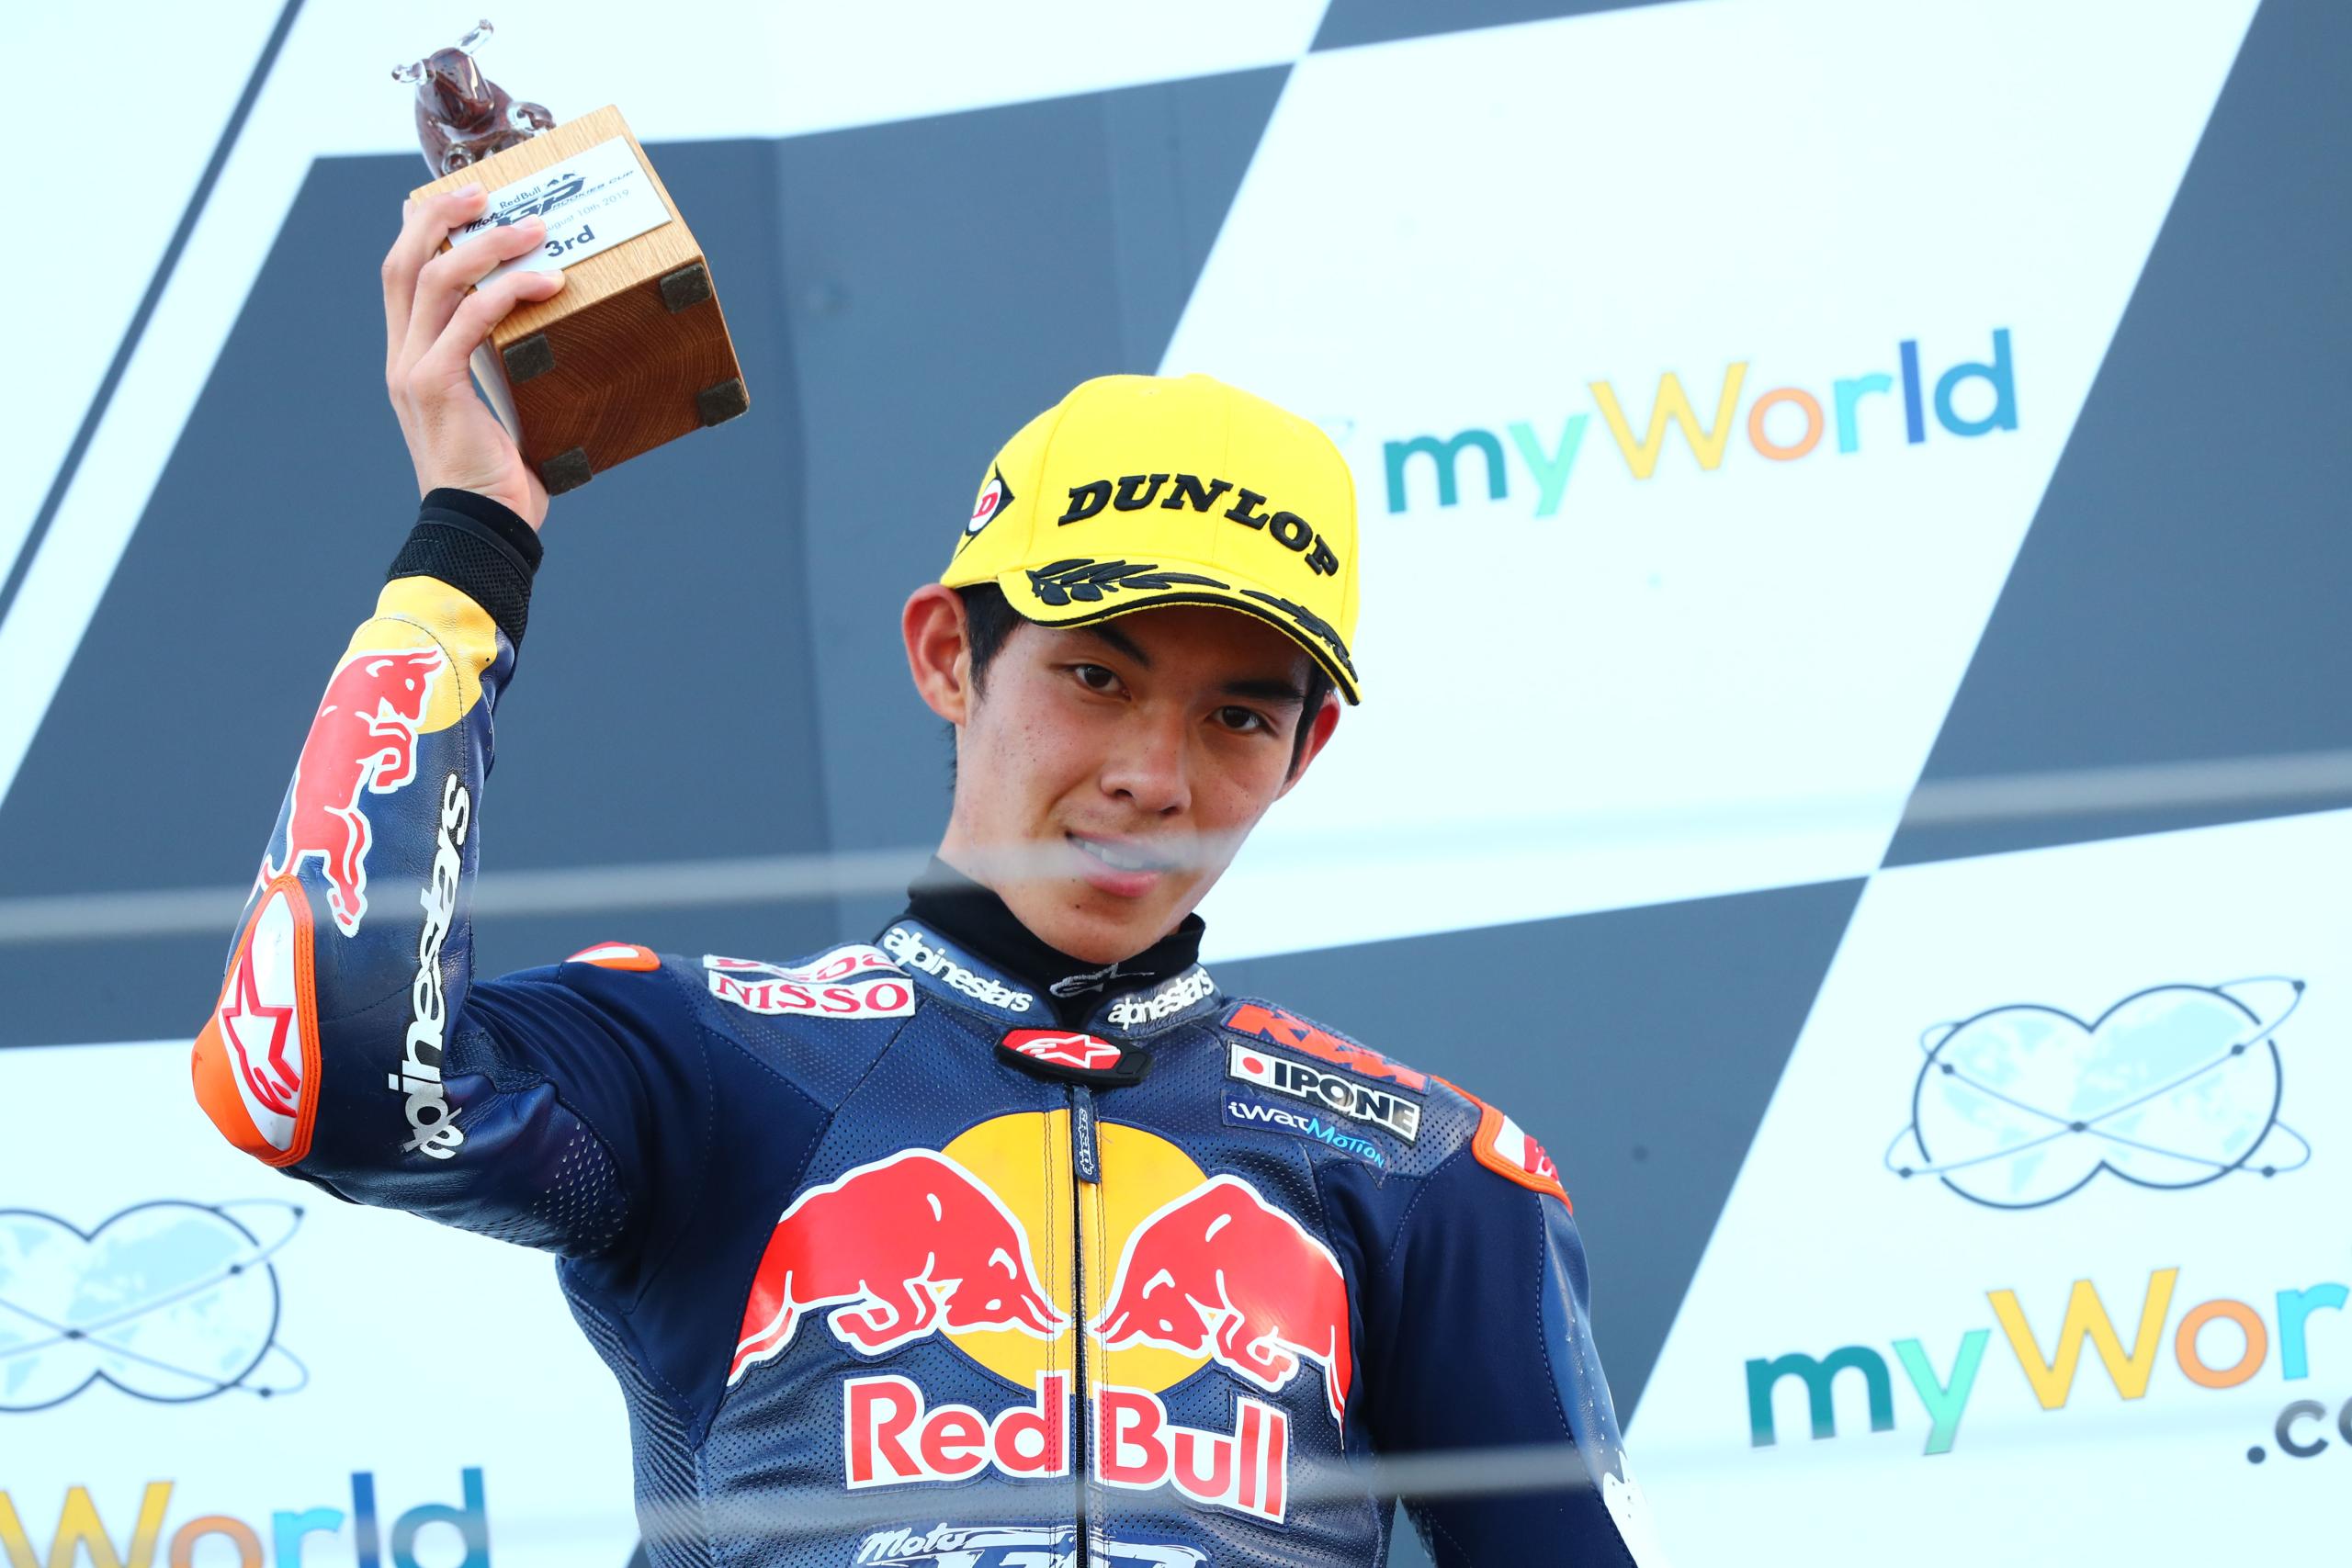 Mantan rookie Red Bull dan podium finisher Suzuka 8H Haruki Noguchi (22) telah meninggal dunia.